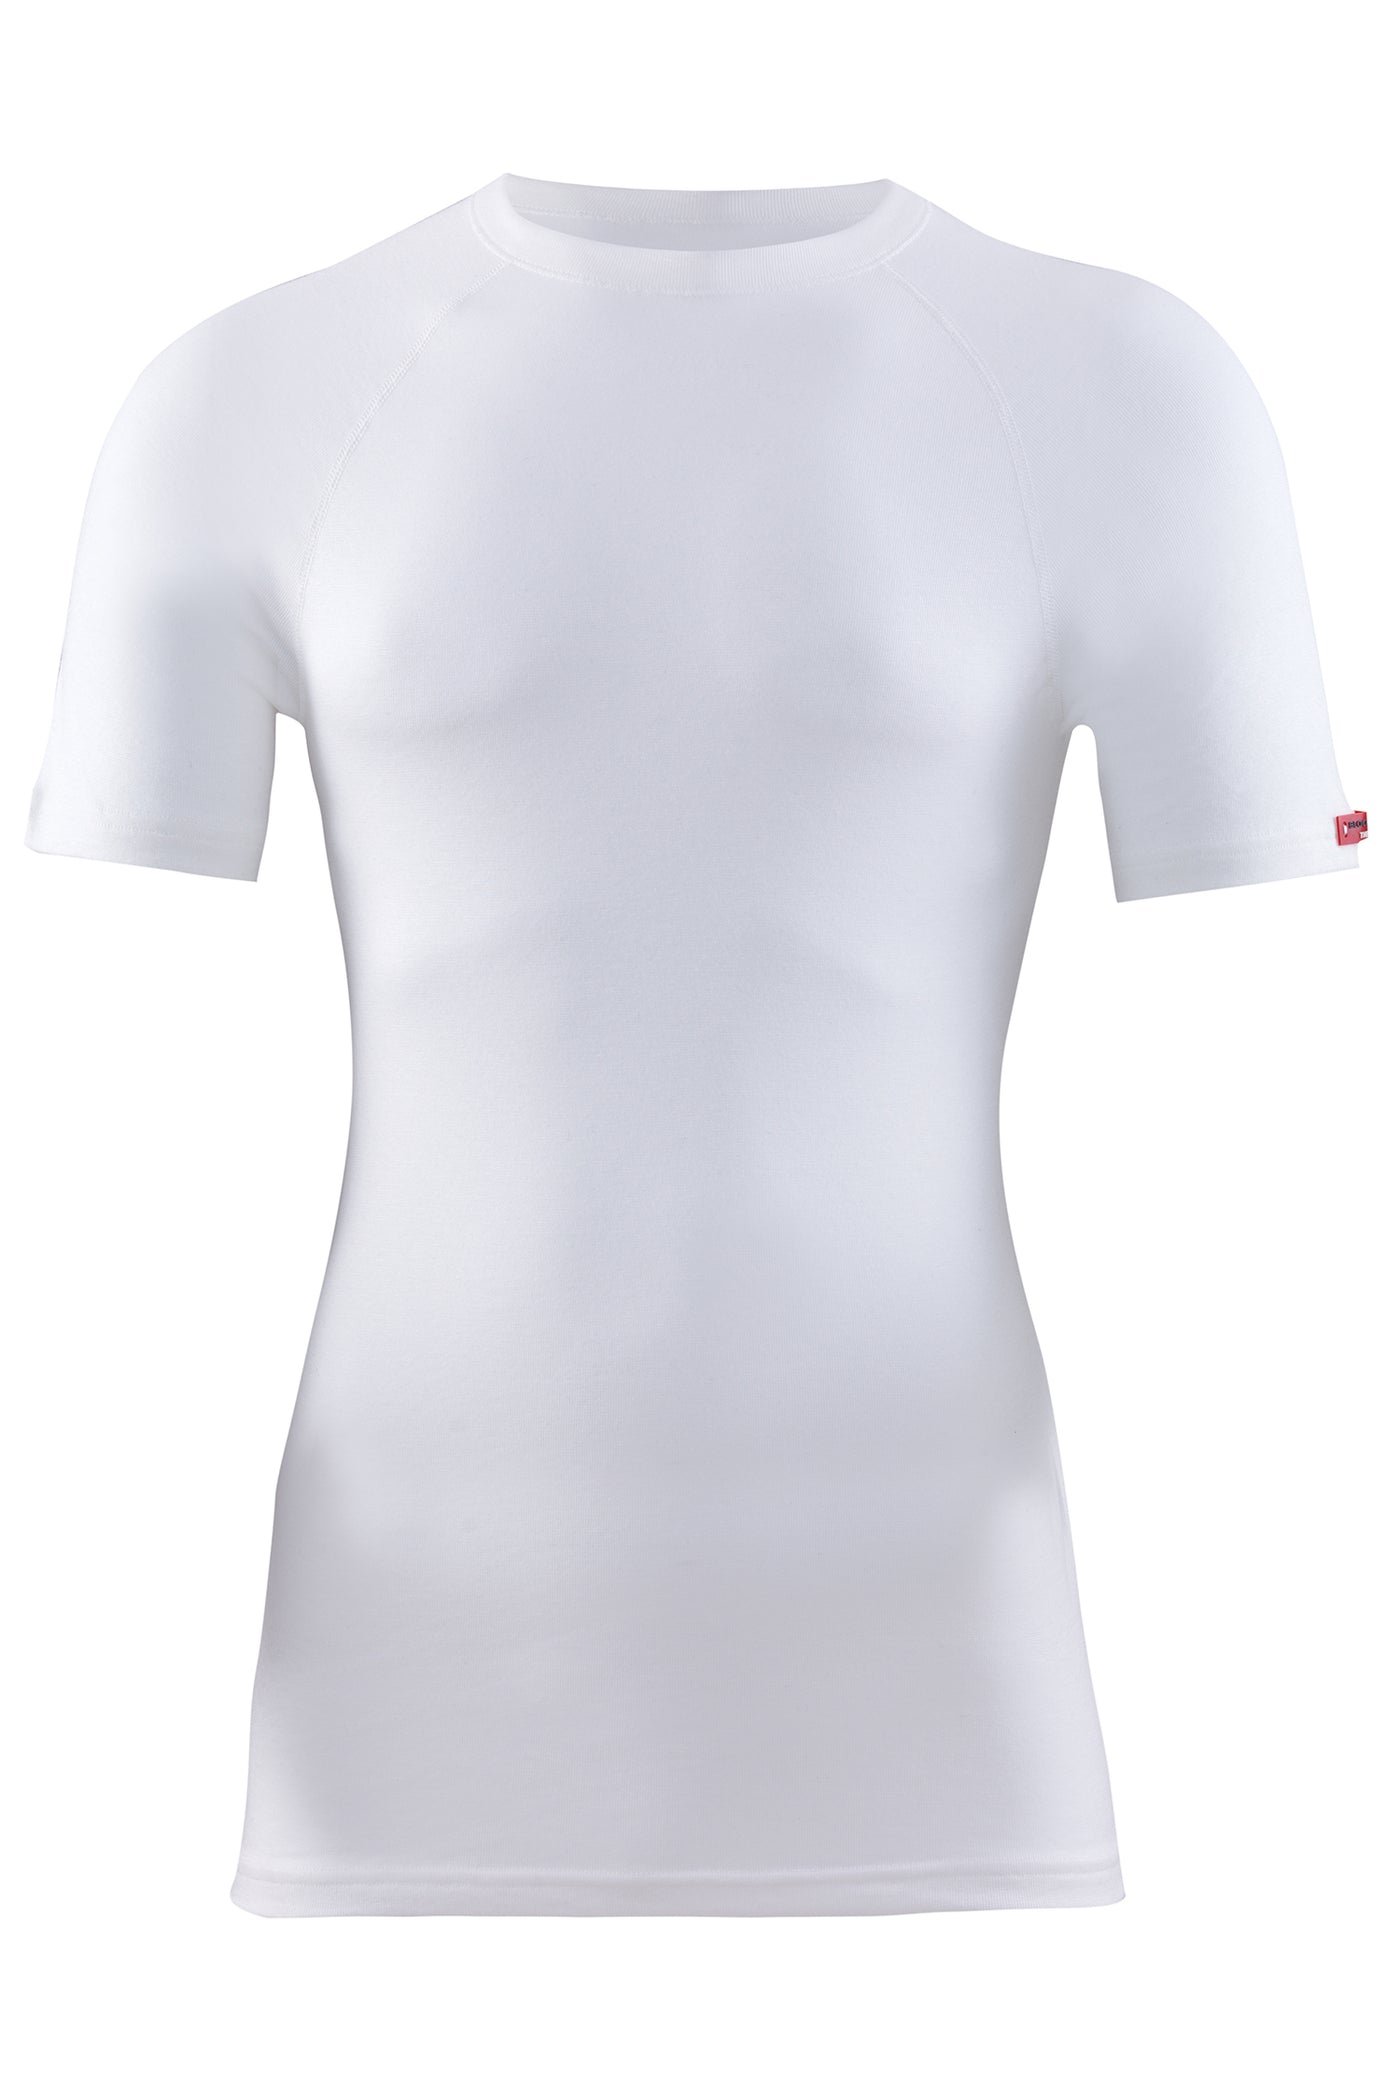 blackspade-Men's thermal t-shirt-9258, level-2-underwear-white